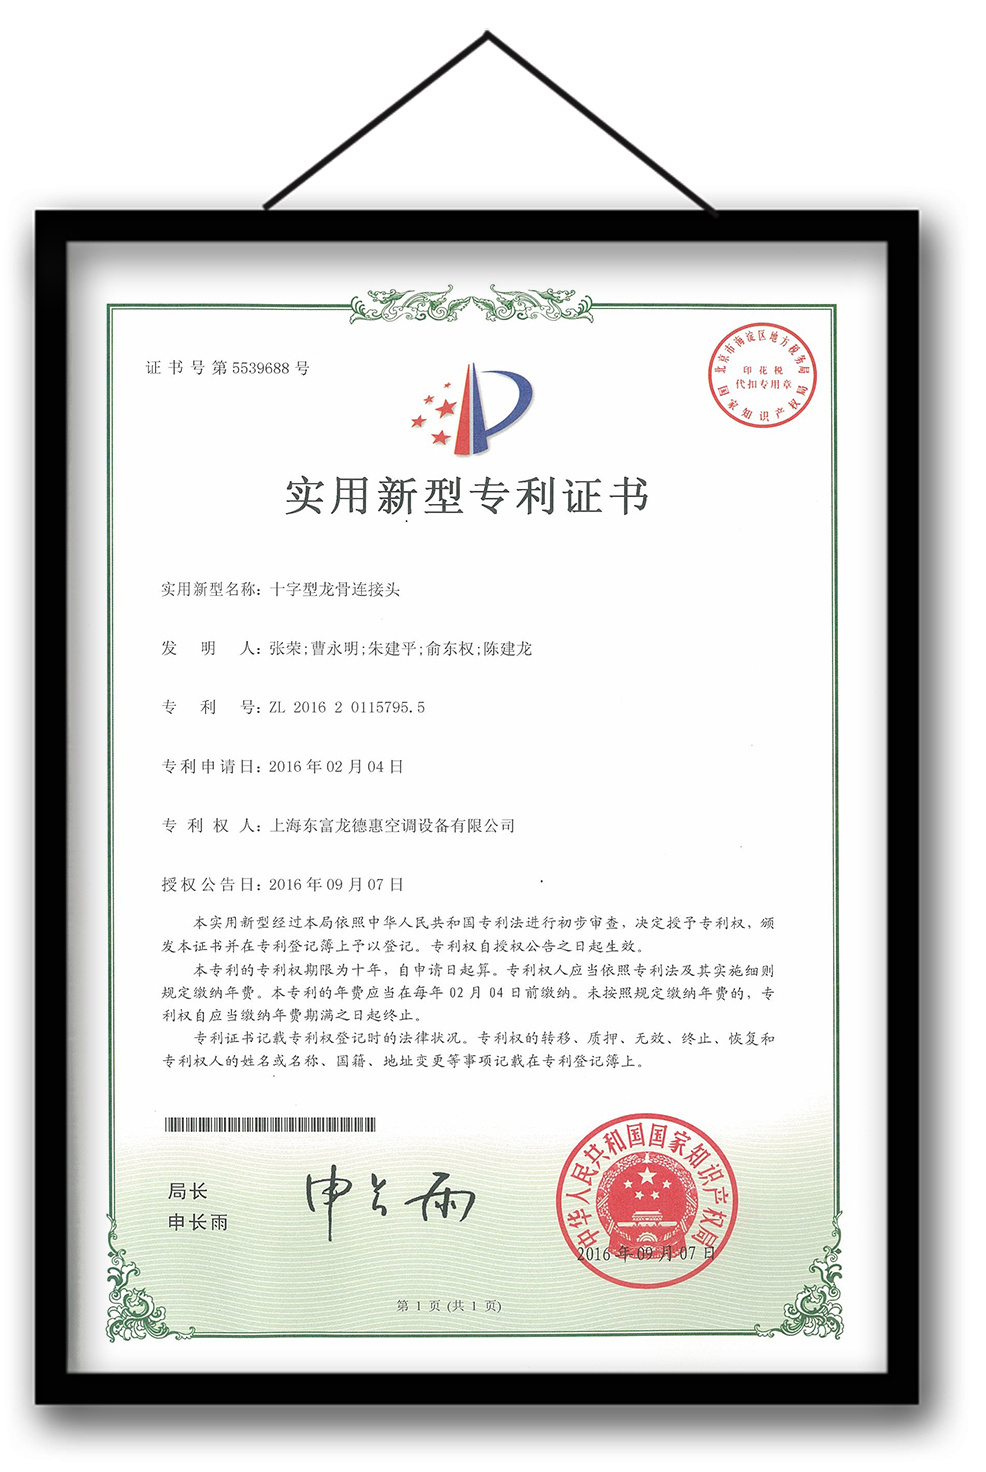 Patent certificate of cross-type keel connector